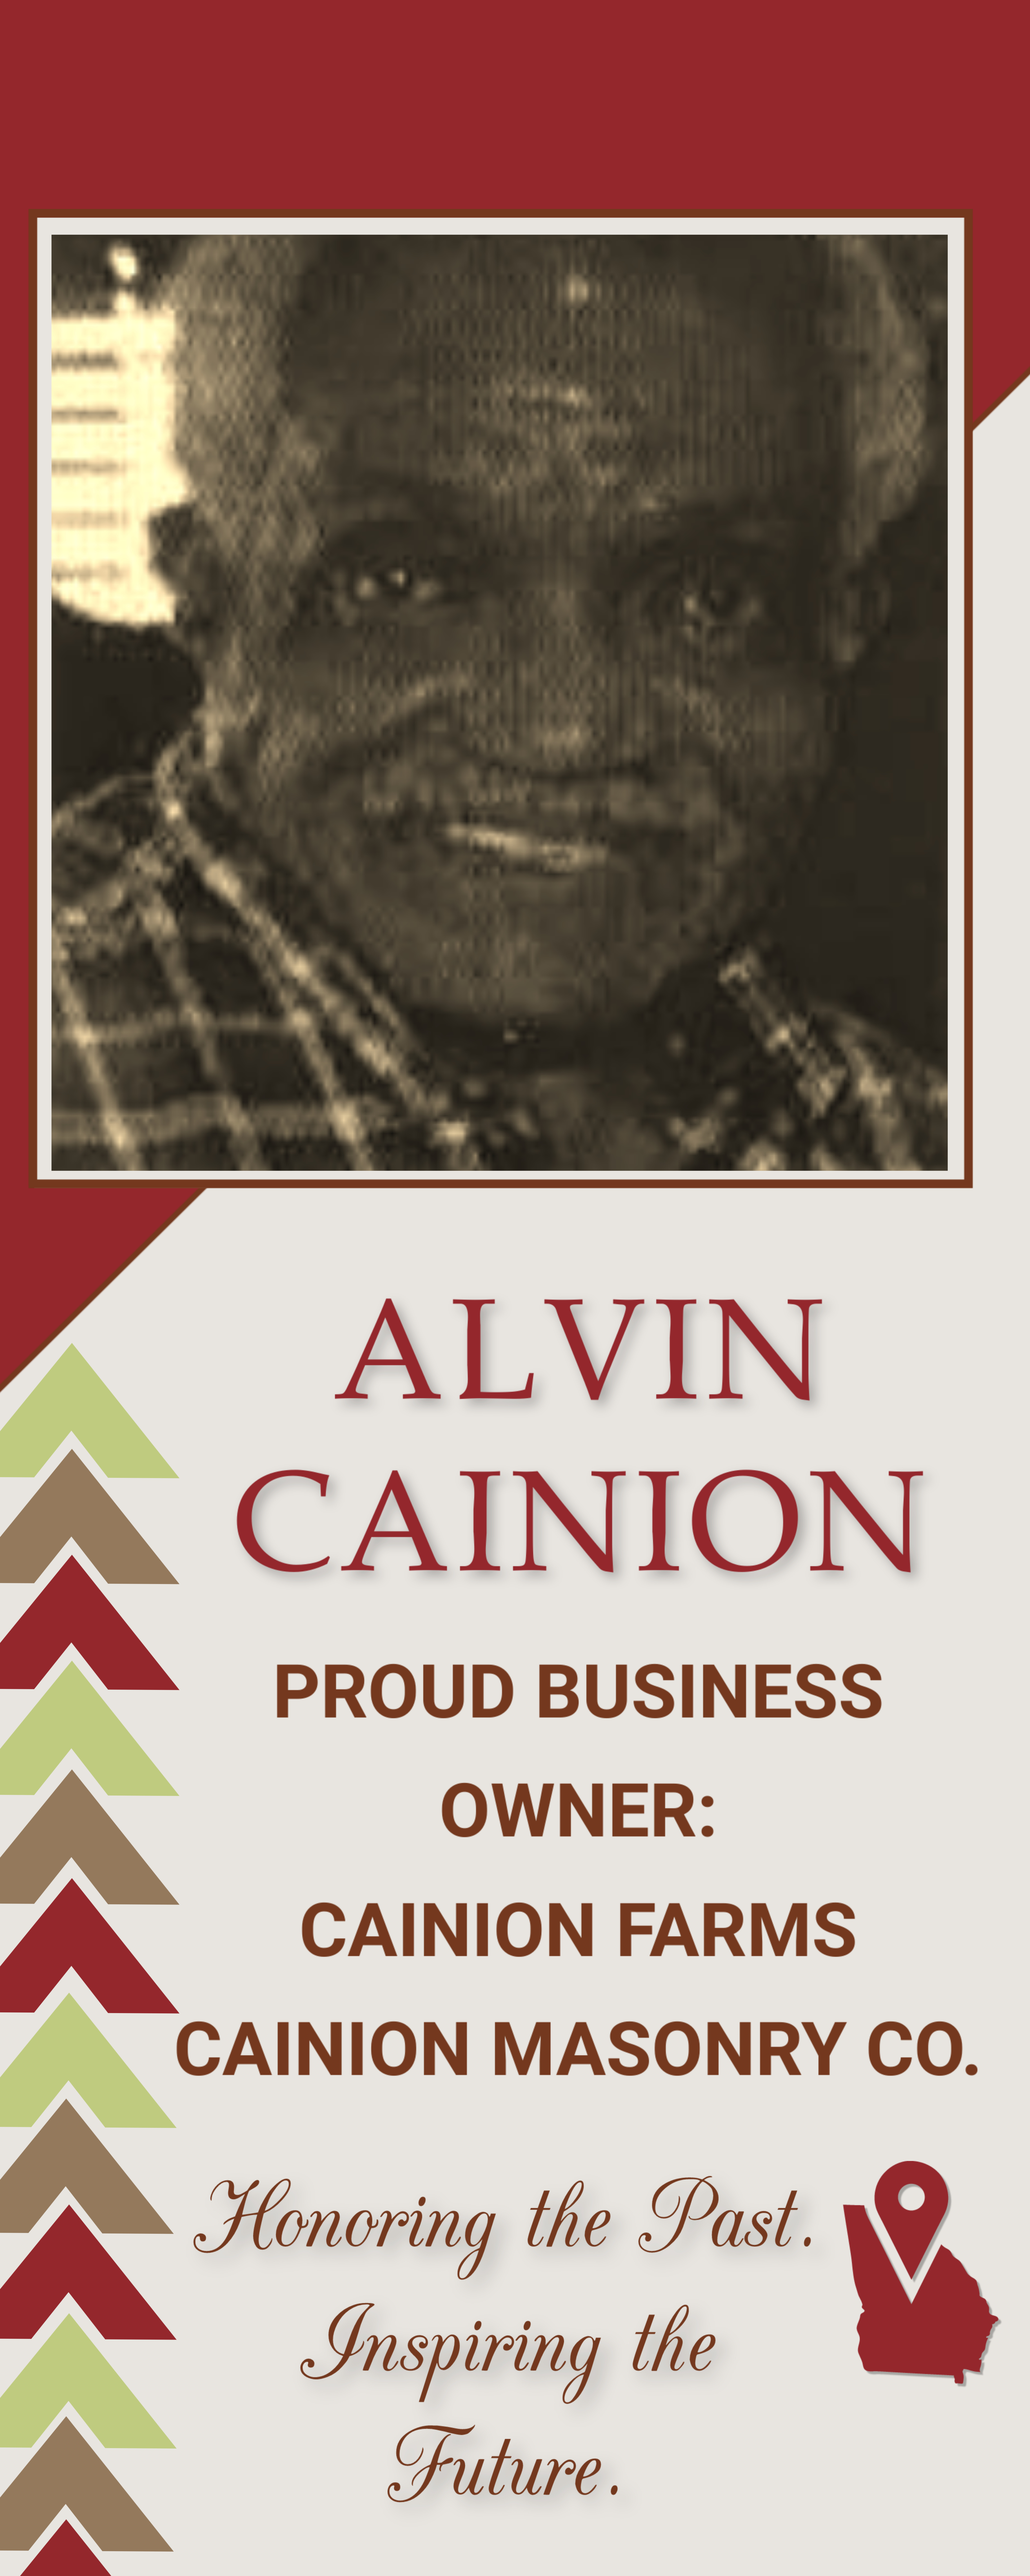 Alvin Cainion